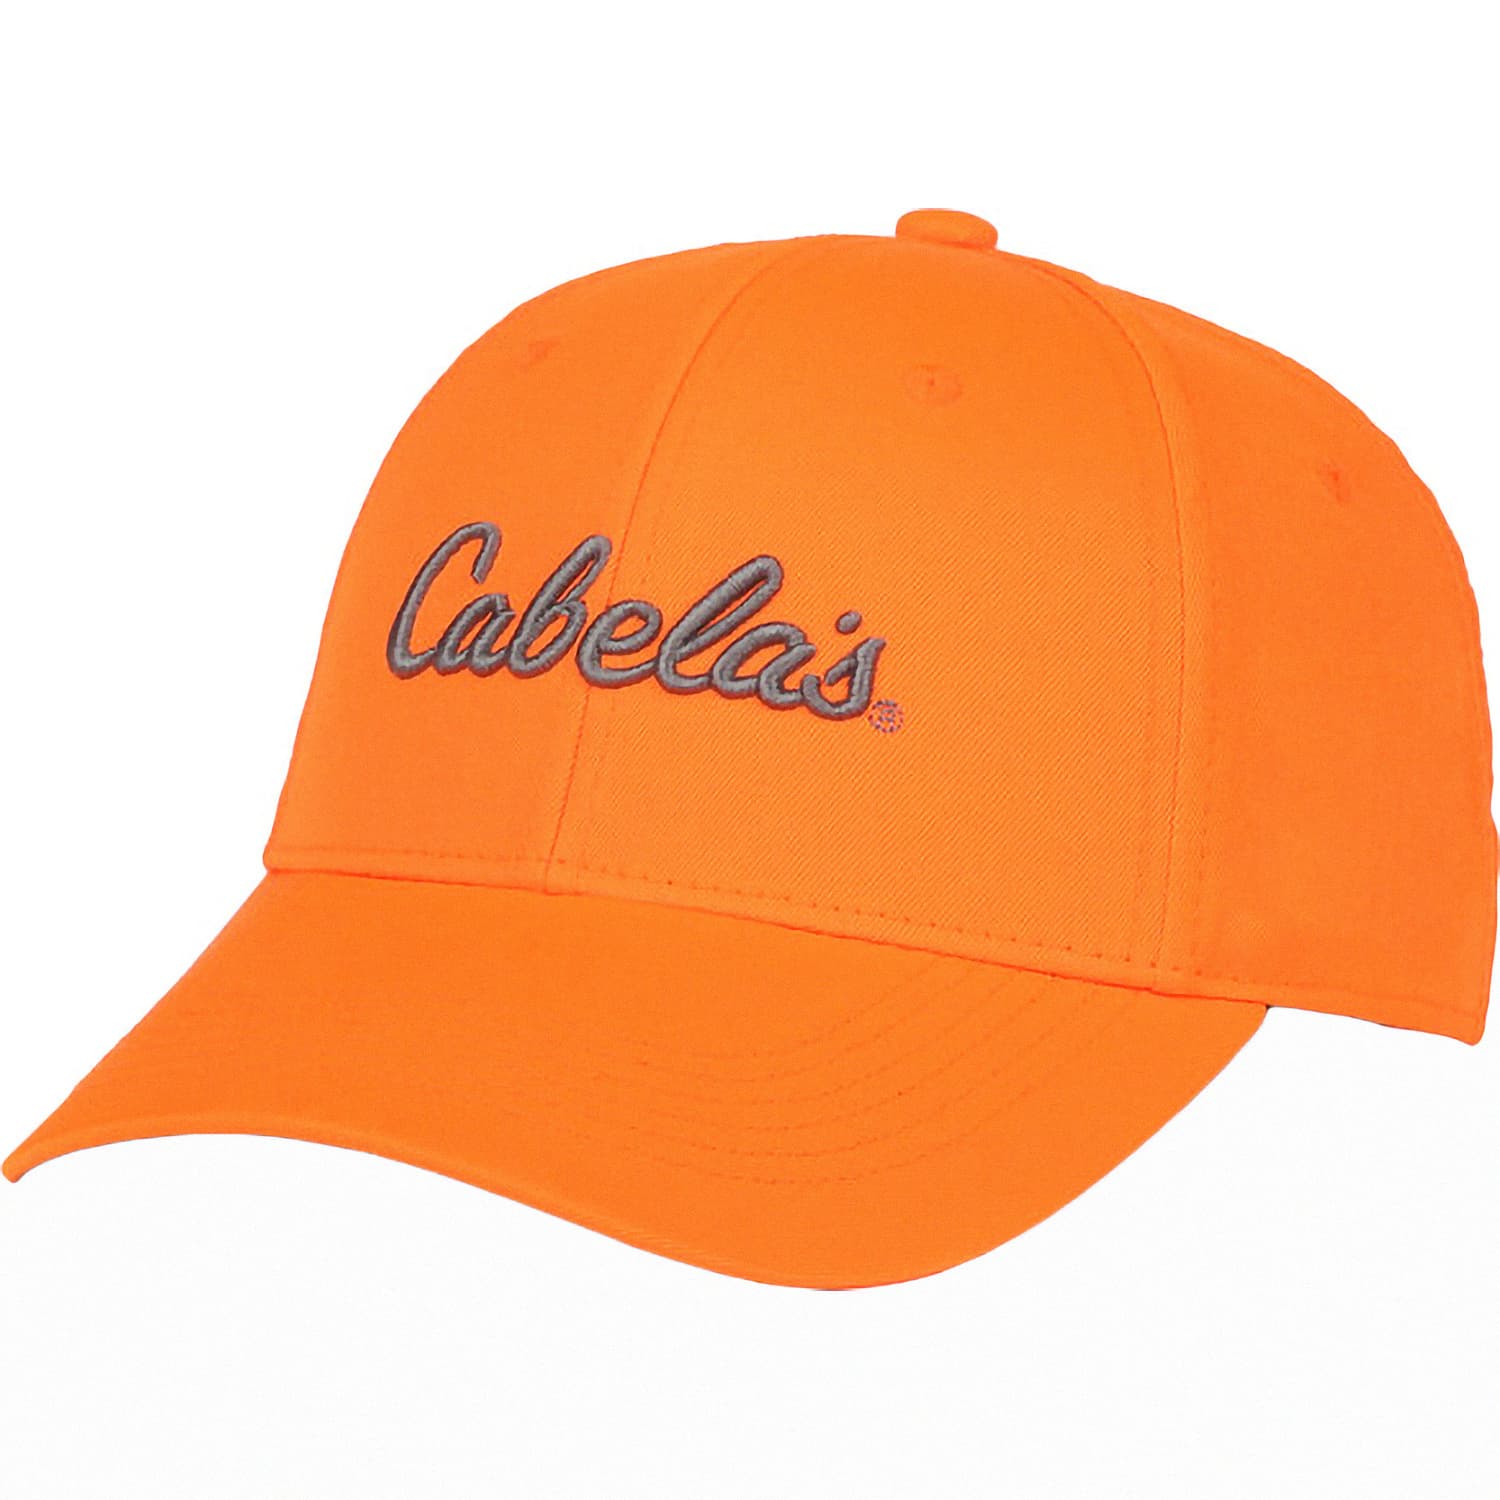 Cabela's Mesh Back Cap